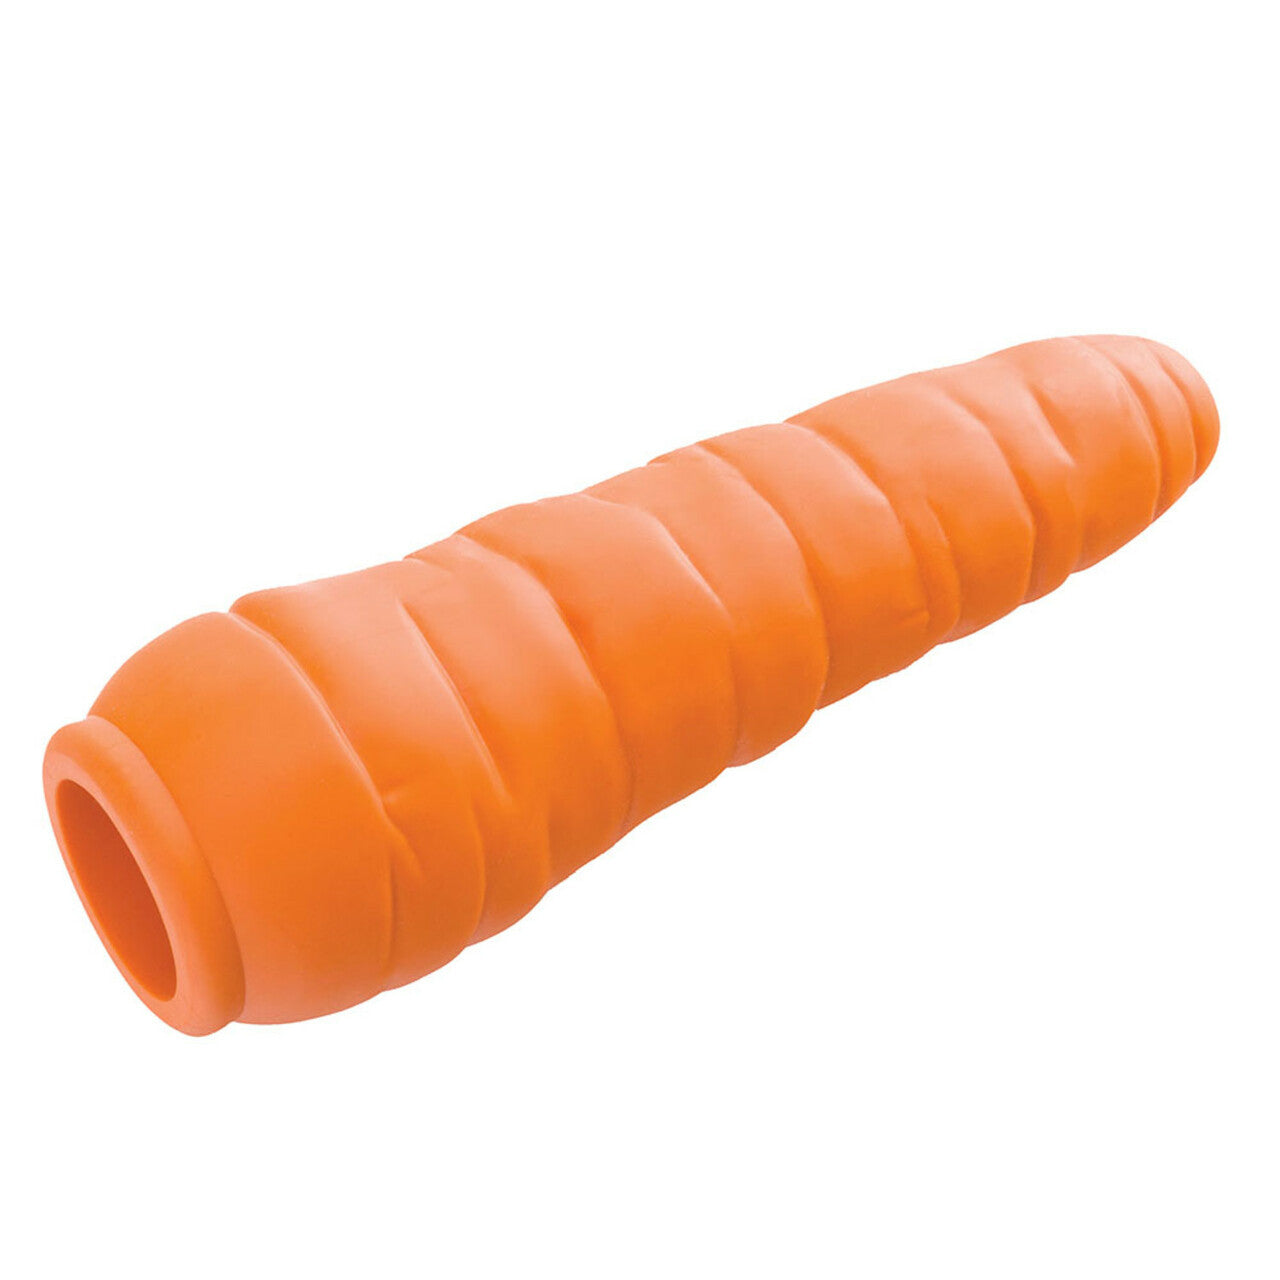 Orbee Tuff Foodies Toys Carrot Image